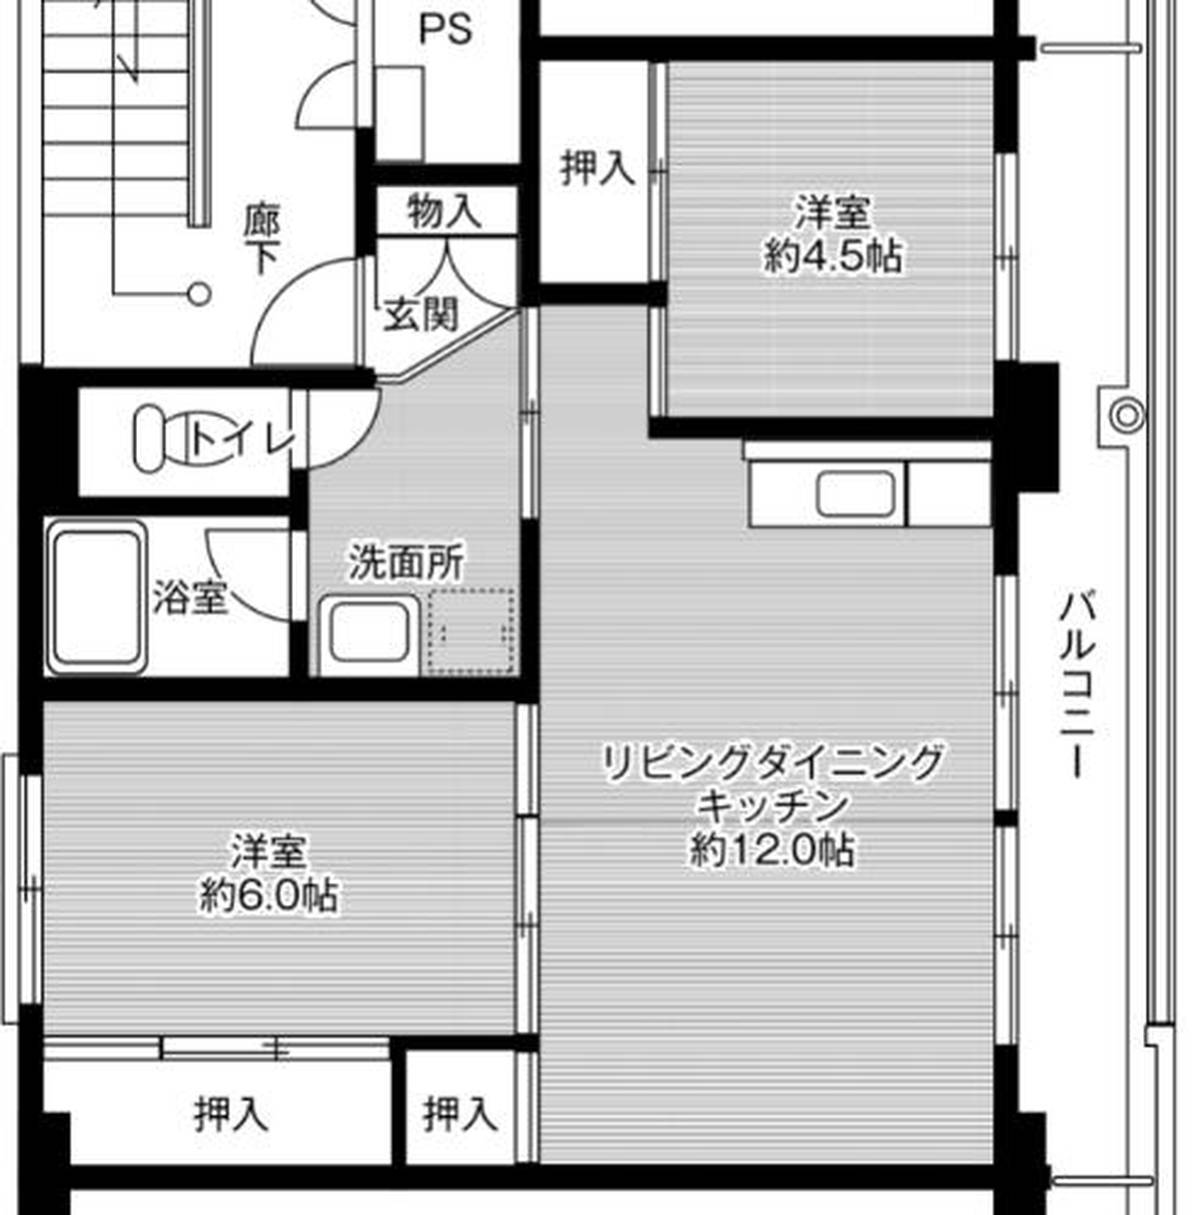 2LDK floorplan of Village House Amagi Hitotsugi in Asakura-shi